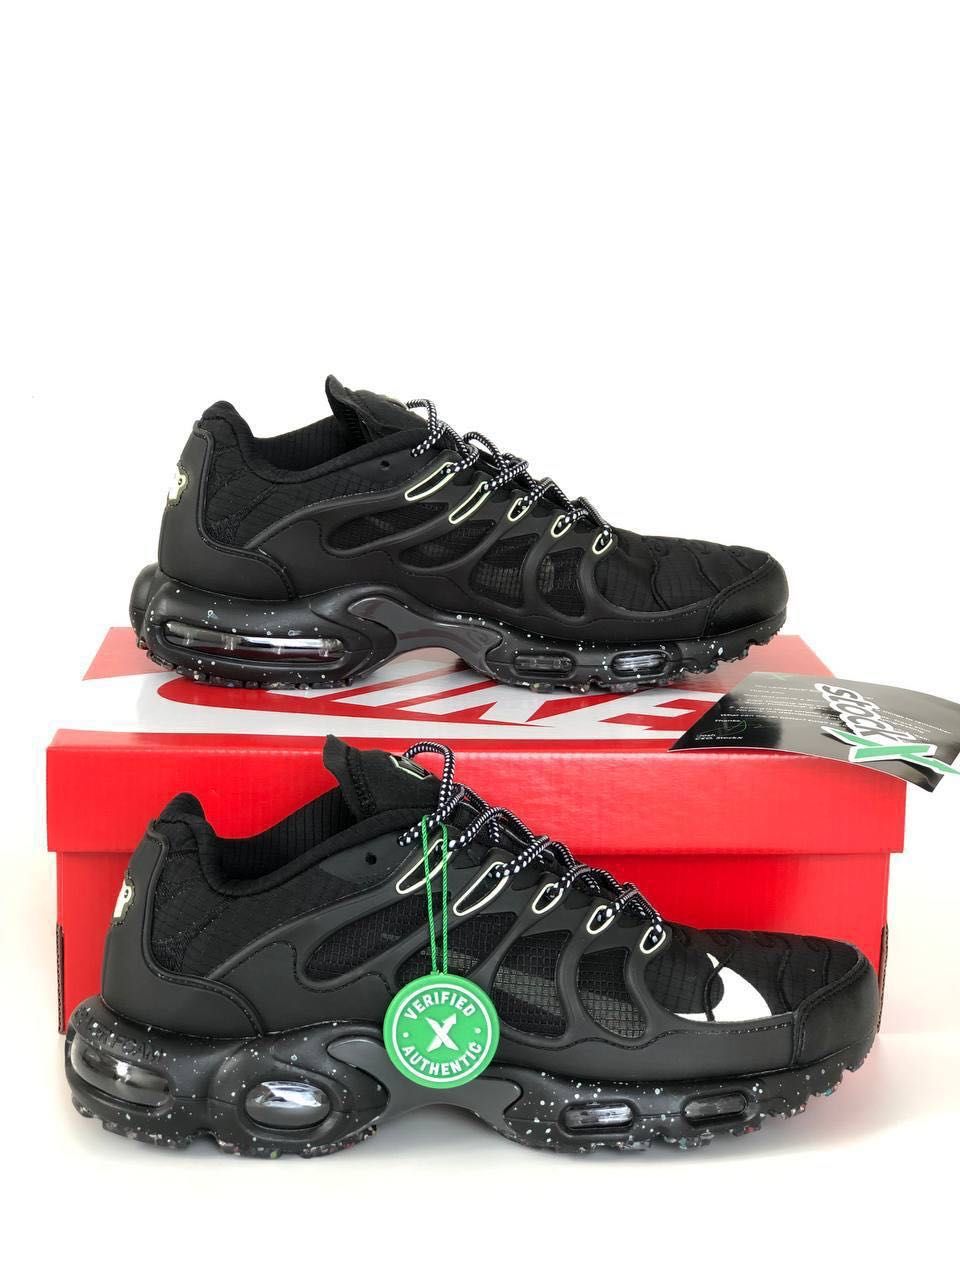 Мужские кроссовки Nike Air Max Tn Terrascape Black Green. 40-45